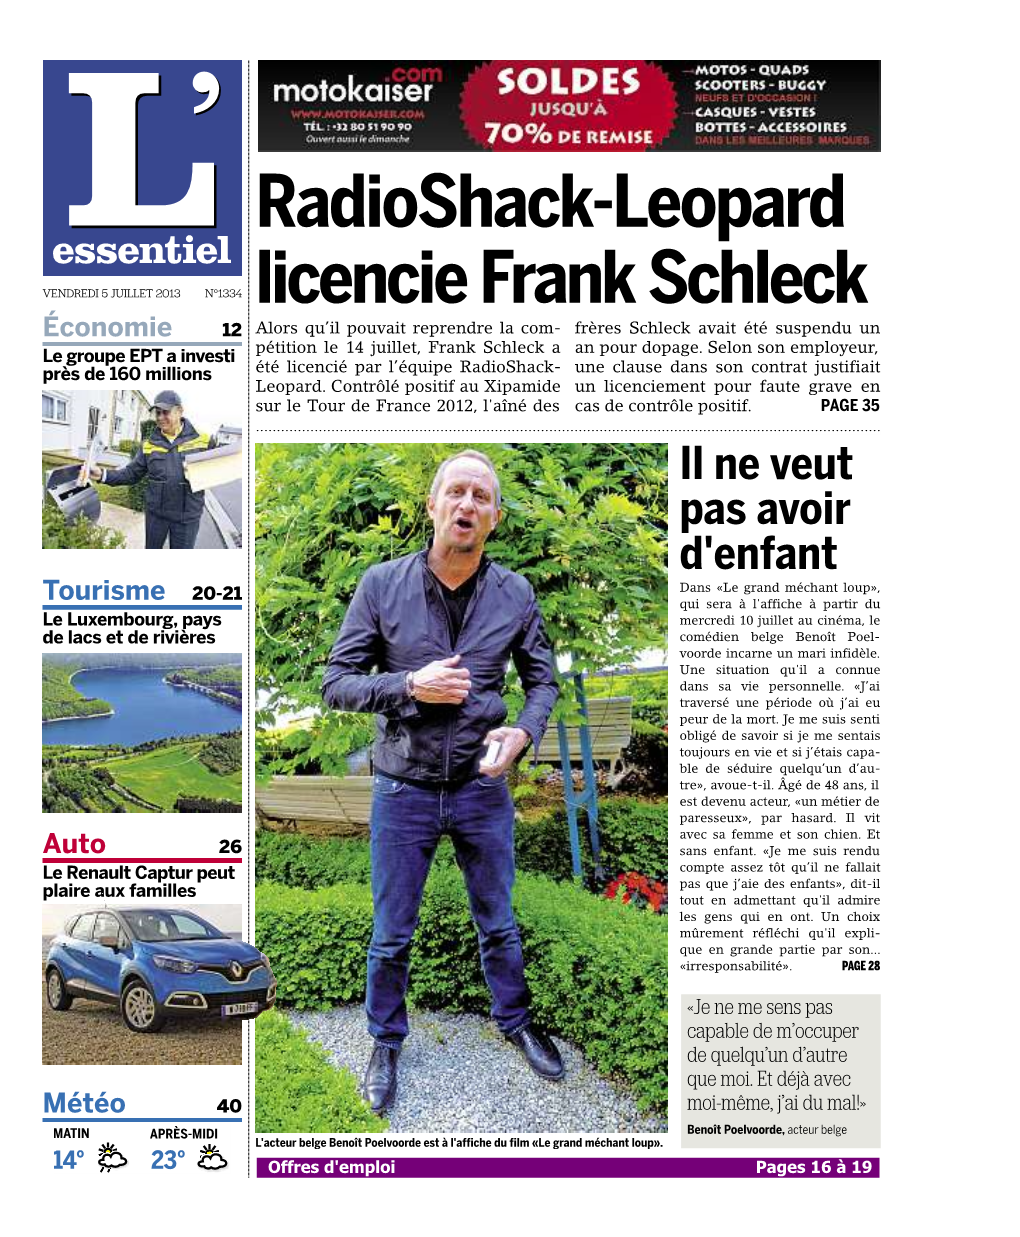 Radioshack-Leopard Licenciefrankschleck